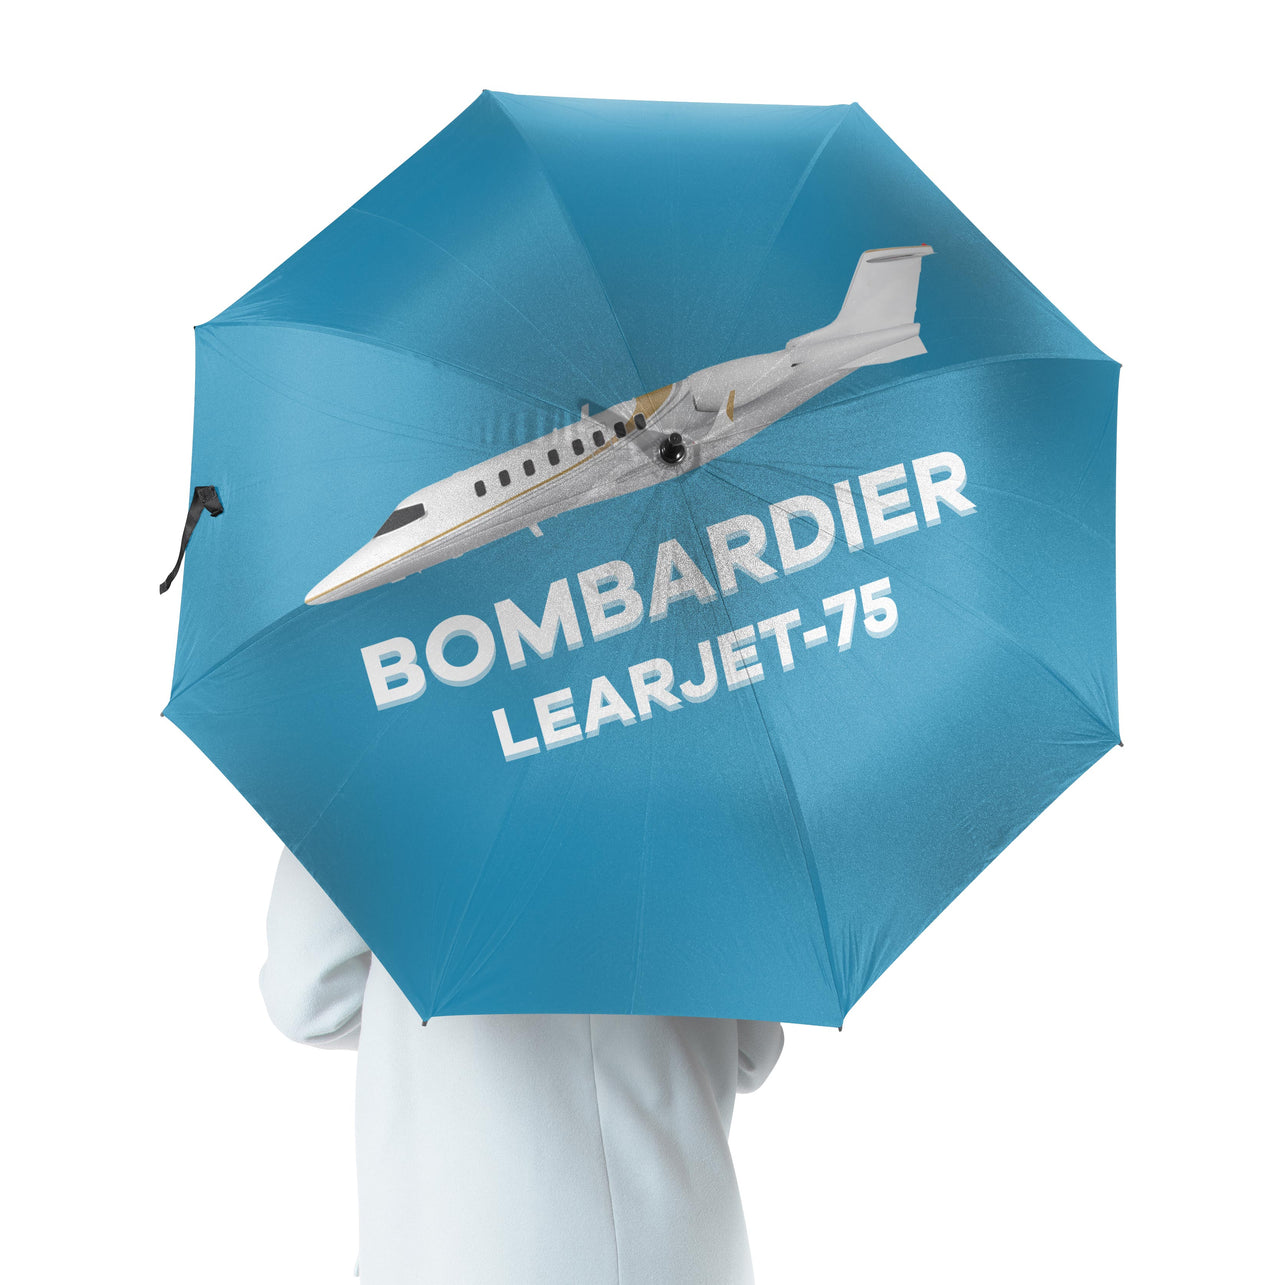 The Bombardier Learjet 75 Designed Umbrella